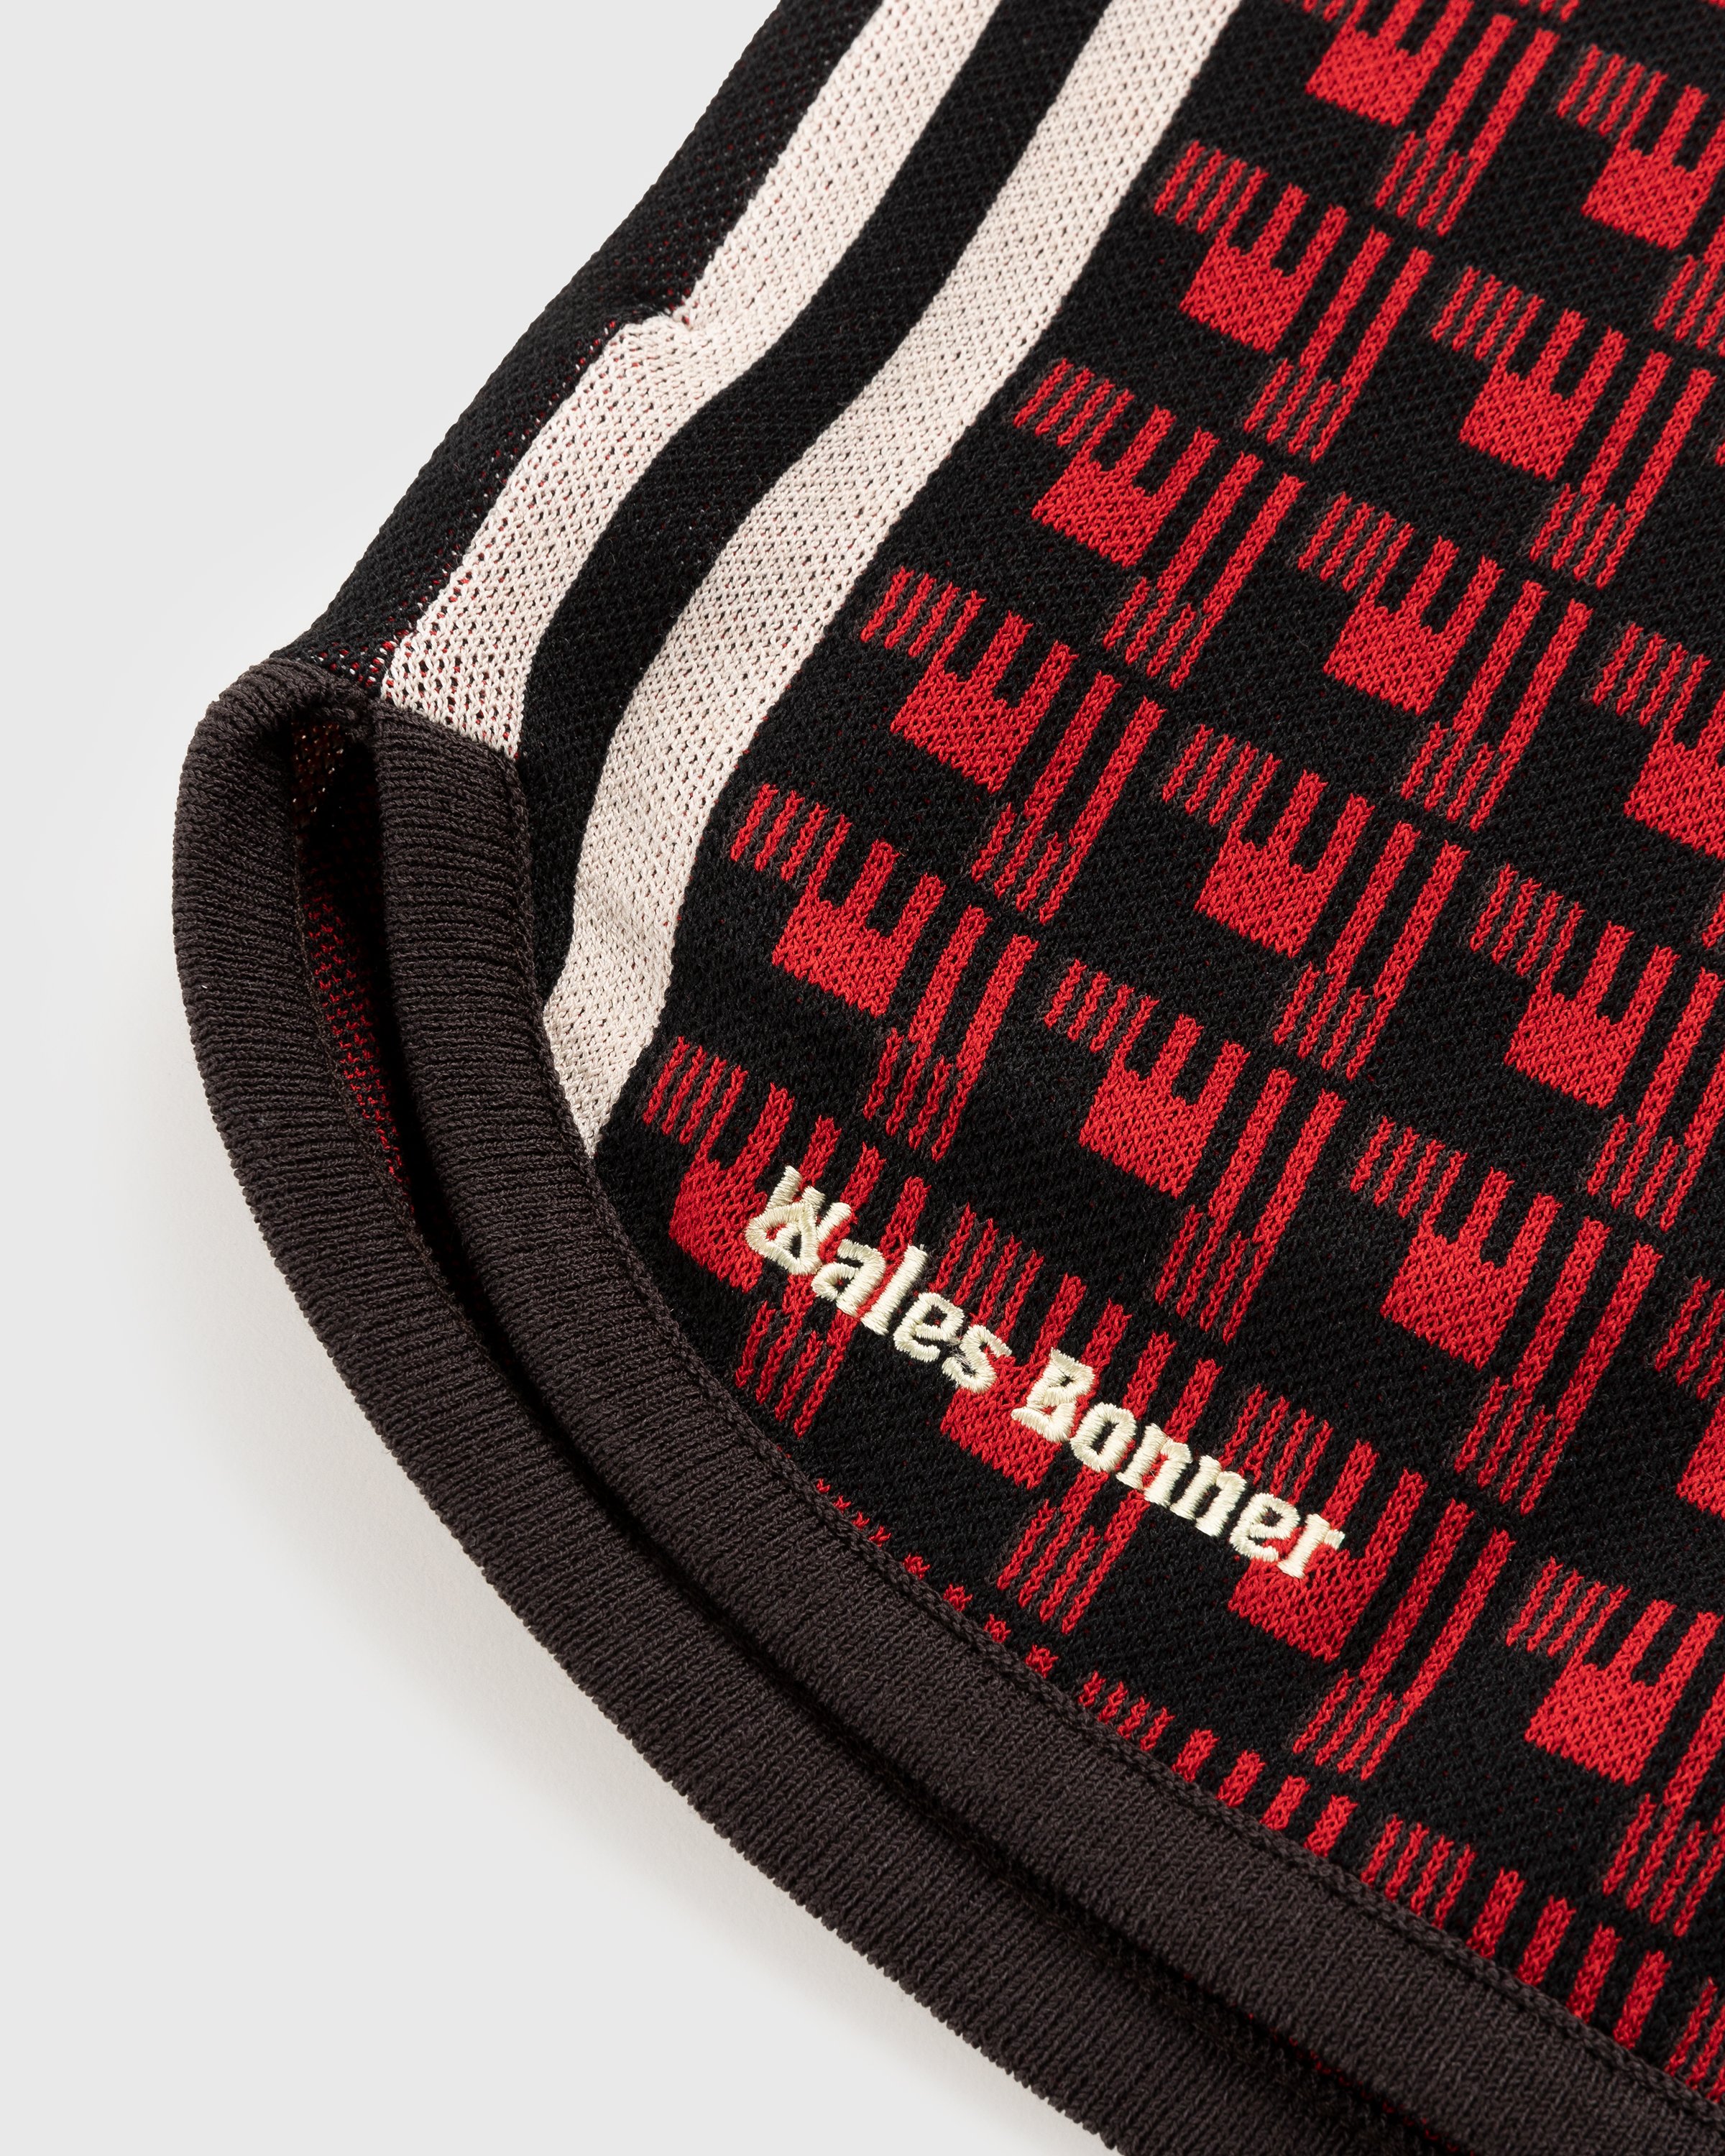 Adidas x Wales Bonner - WB Knit Shorts Scarlet/Black - Clothing - Red - Image 3